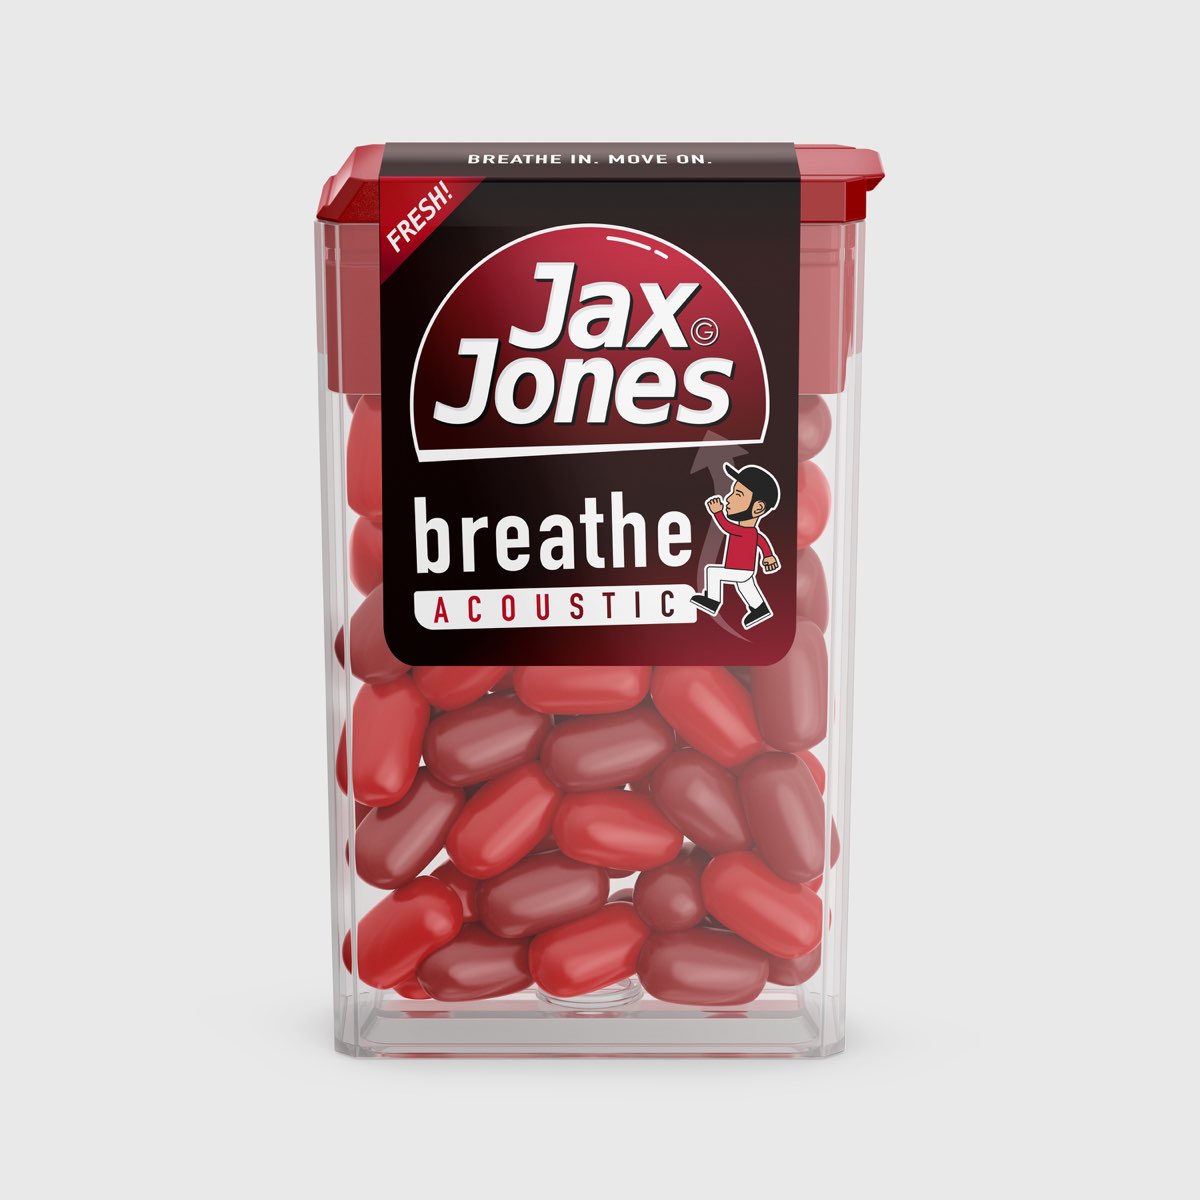 Never be lonely jax jones zoe. Breathe Jax. Jax Jones Breathe. Jax Jones feat. INA Wroldsen - Breathe. INA Wroldsen Breathe.